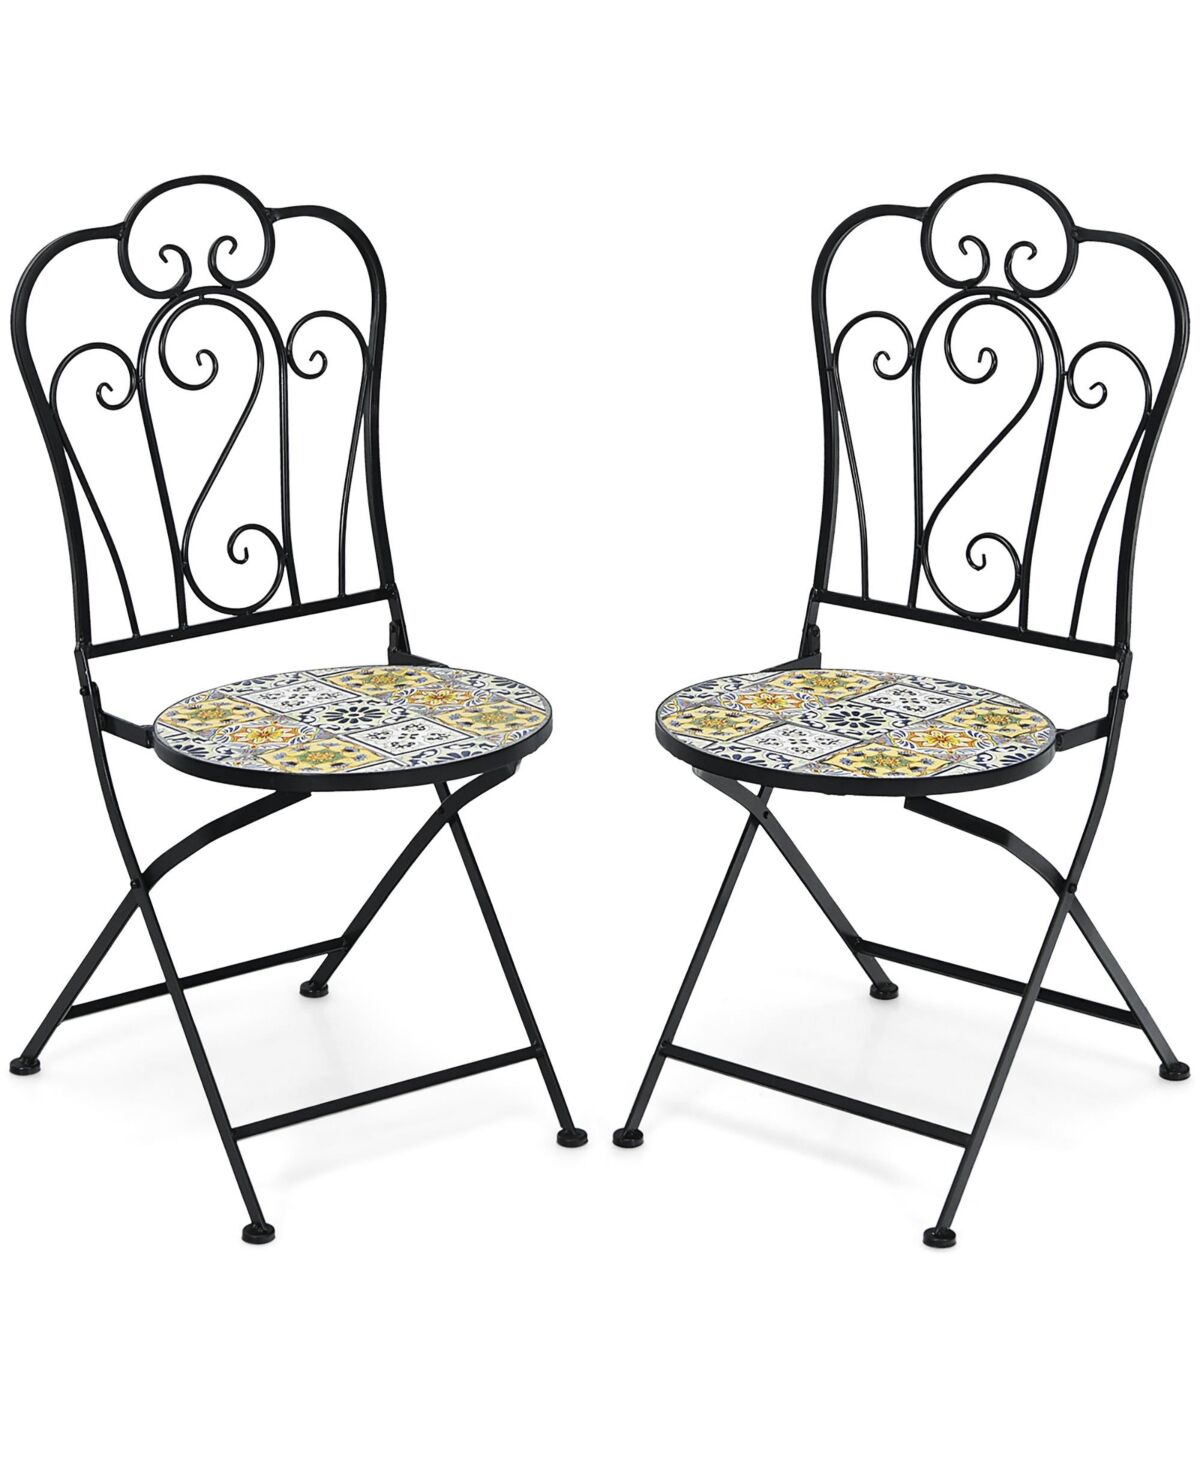 Costway 2PCS Patio Folding Mosaic Bistro Chairs Flower Pattern Seat Garden Deck - Black